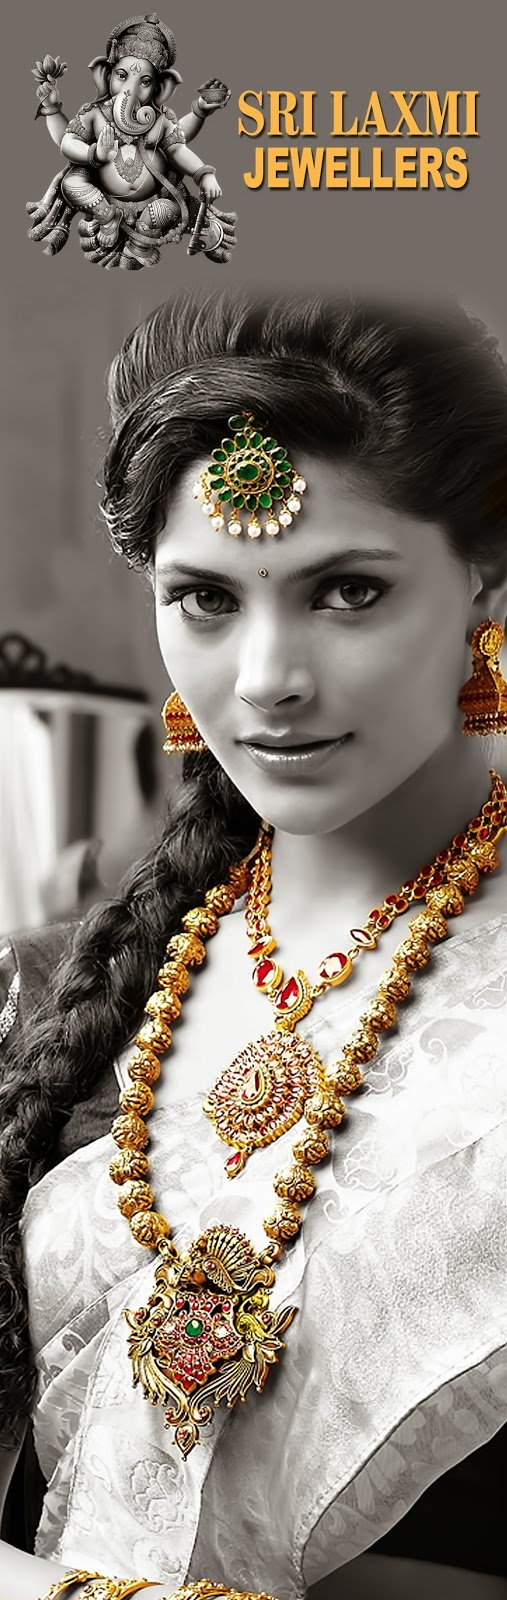 jewellery-female-models-HD-wallpapers-free-online01-naveengfx.com